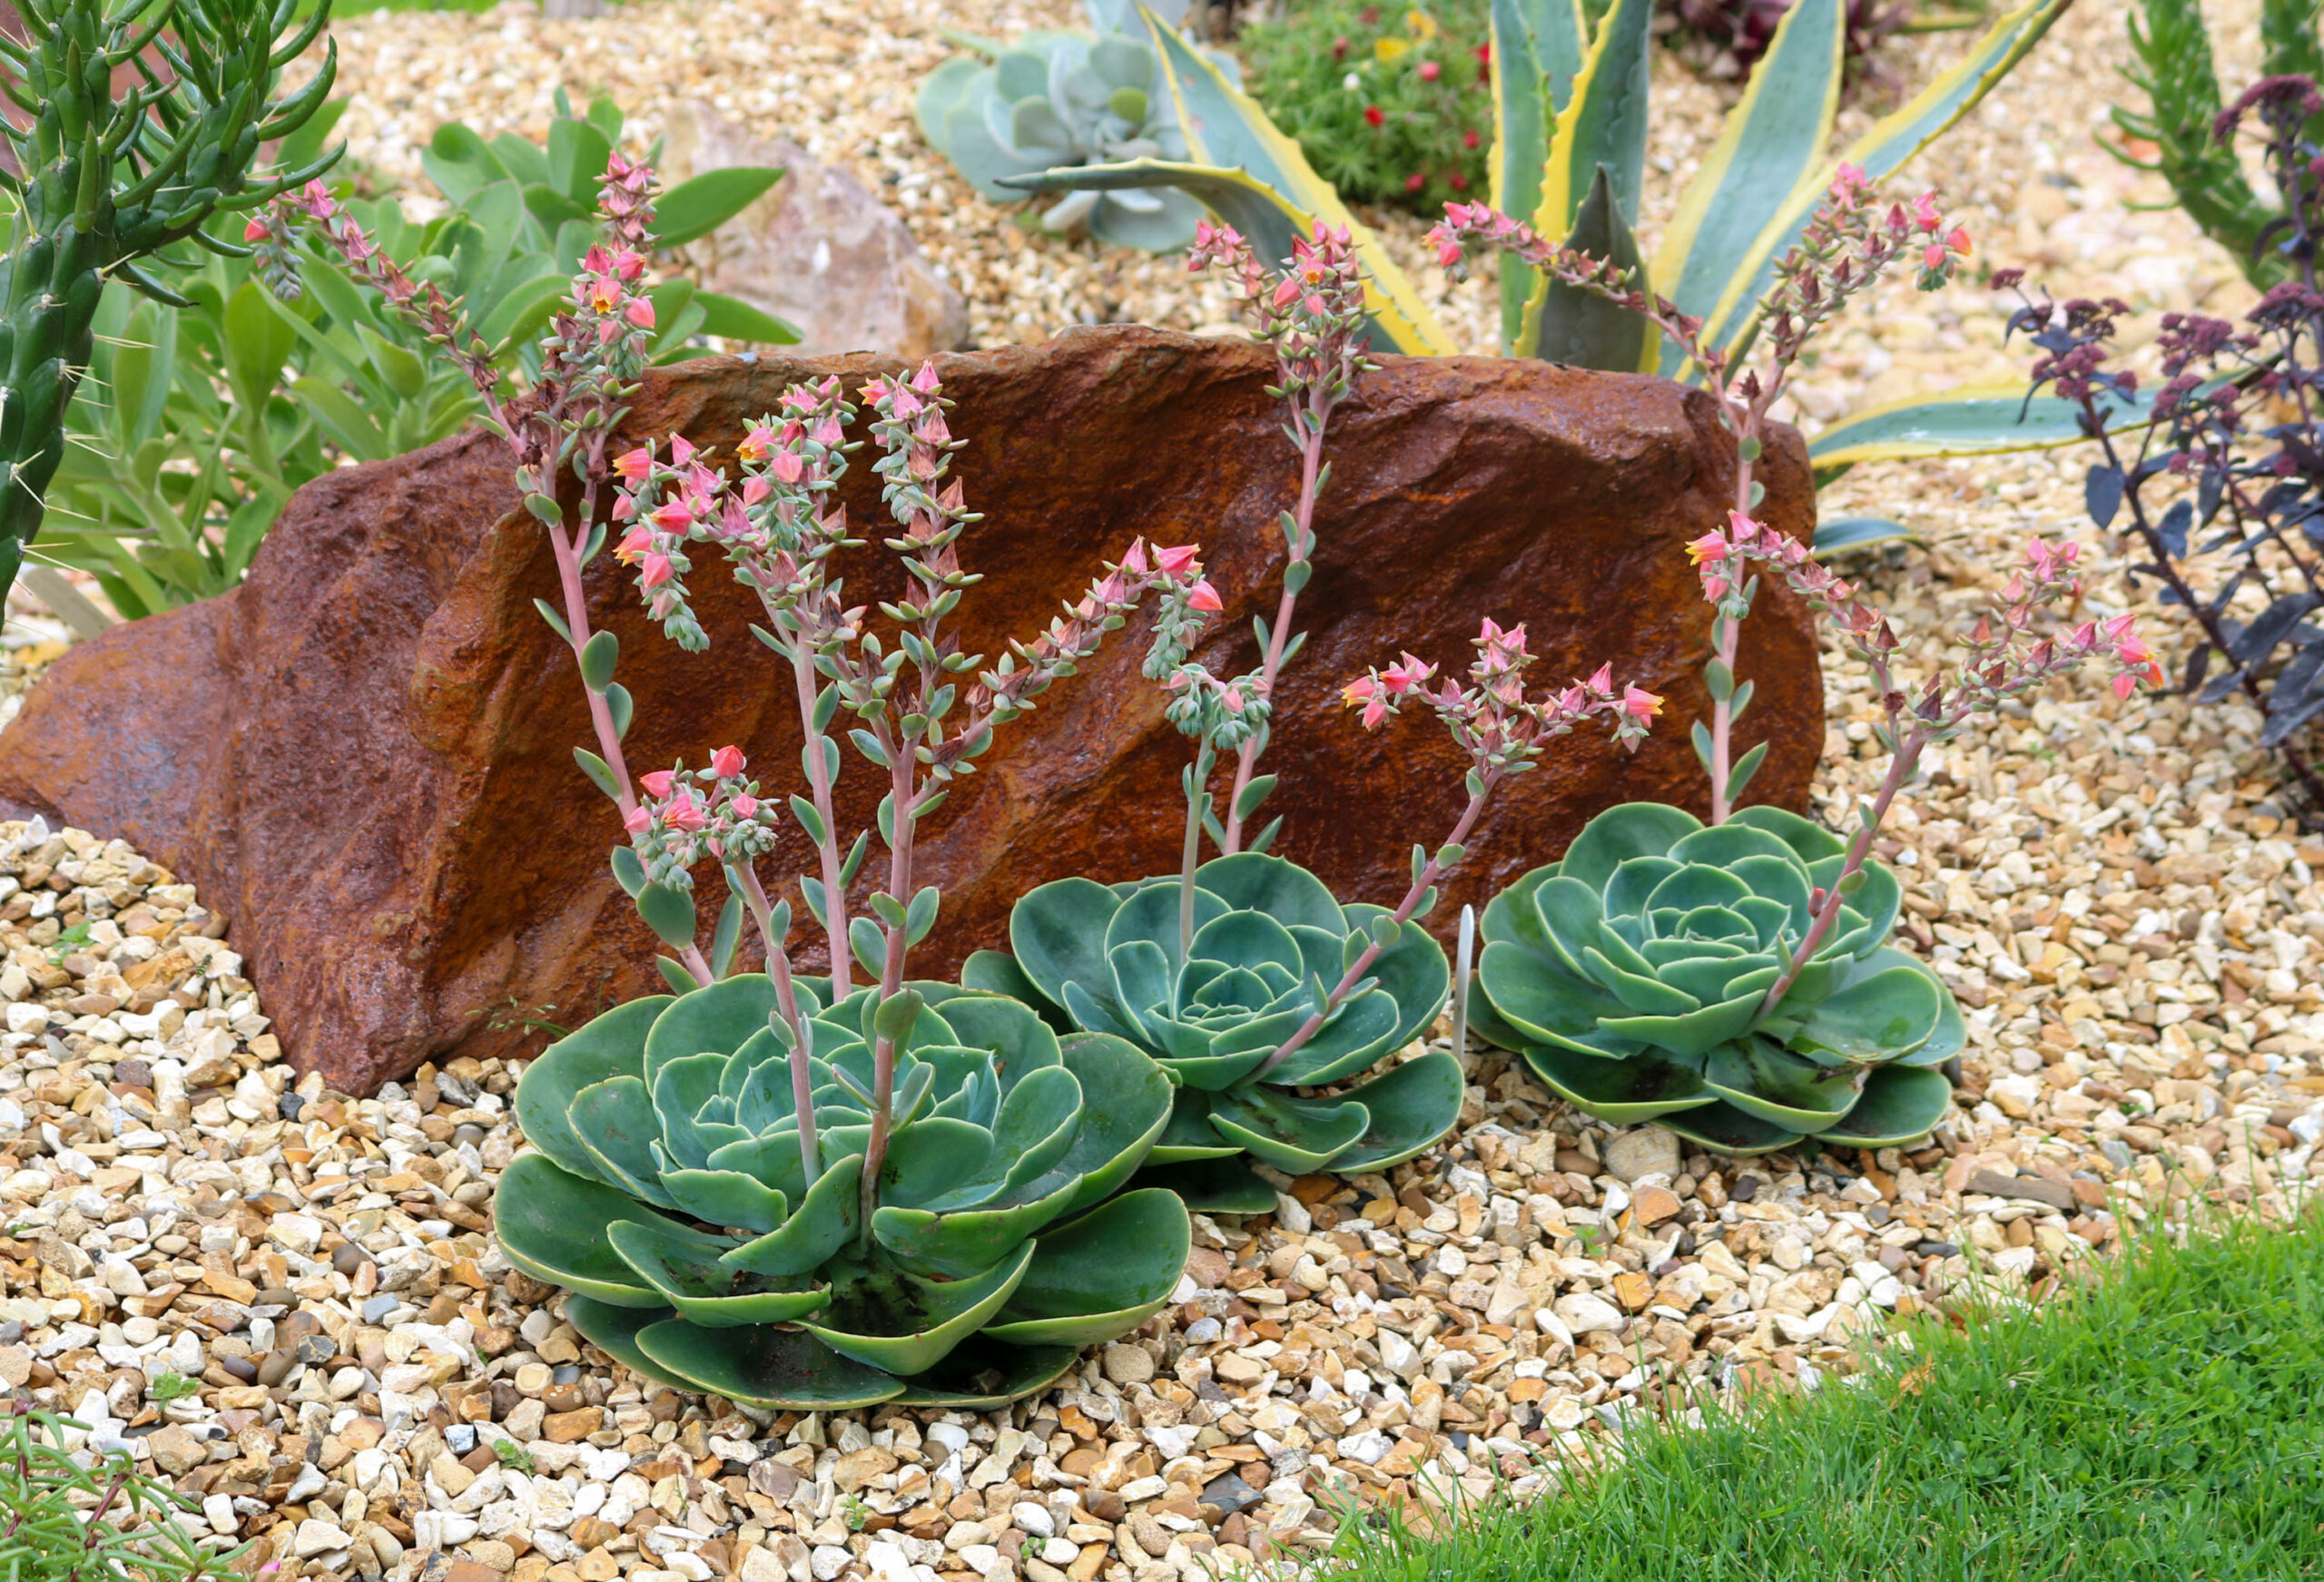 Cactus and brown stone in garden. Succulent, Cactus, Drought tolerant plants